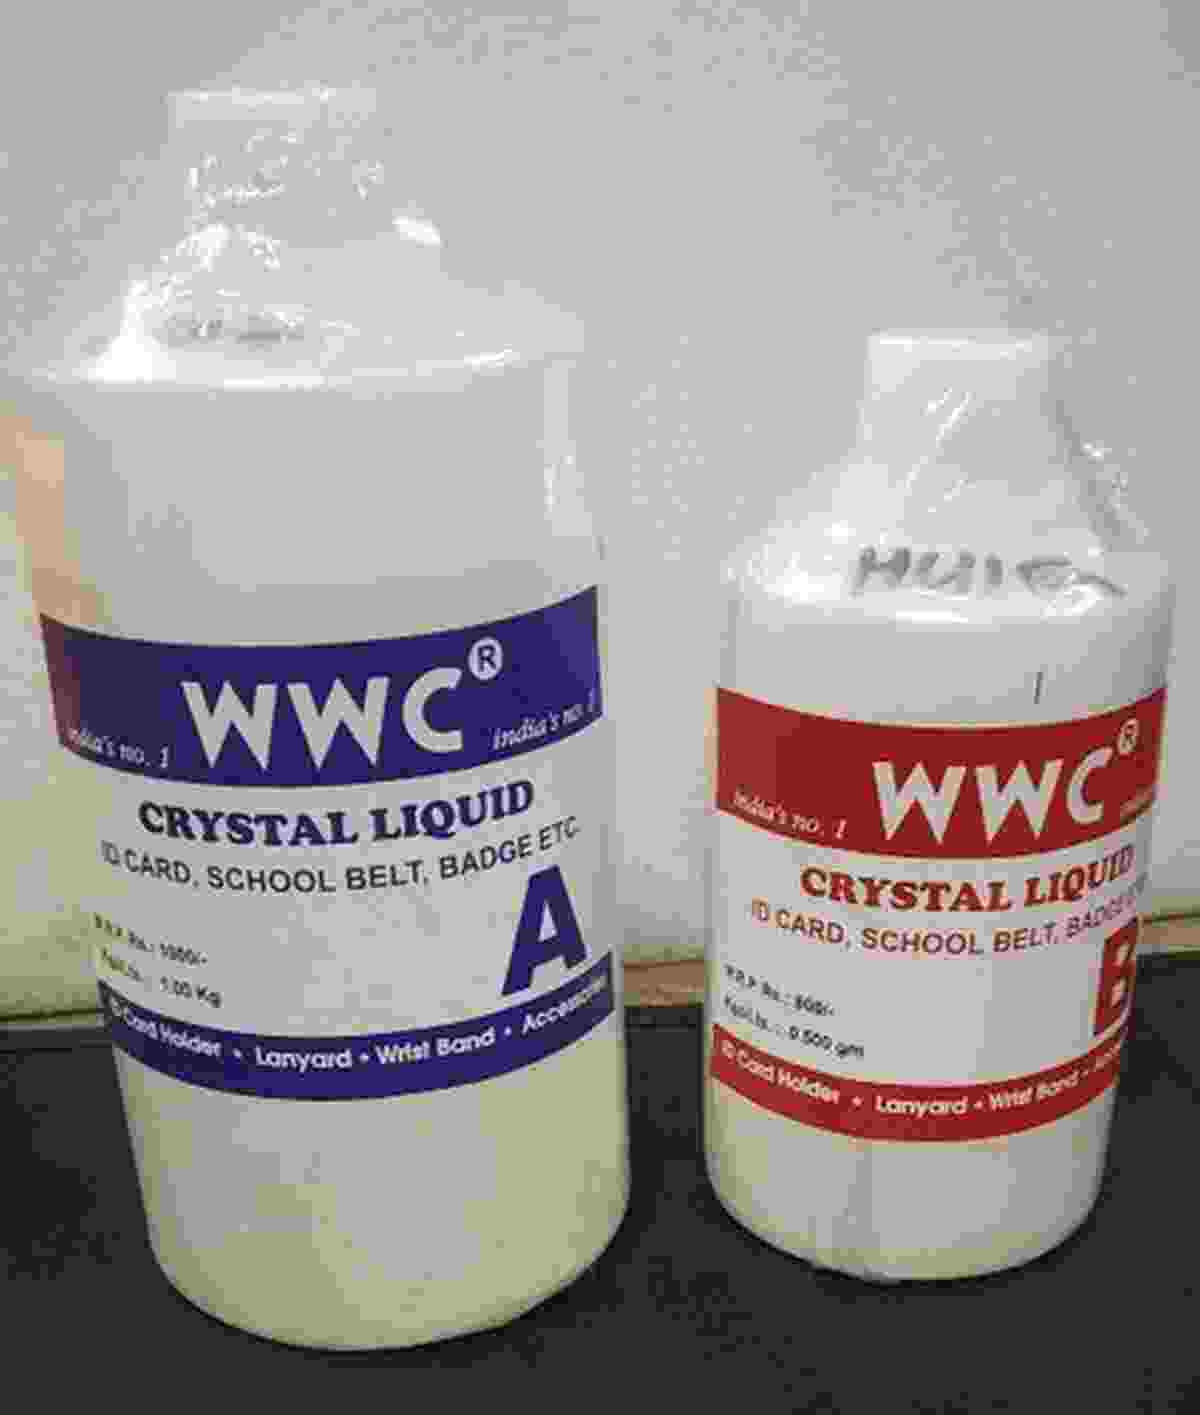 WWC Crystal iCard School Belt & Badges Lamination Chemical Liquid